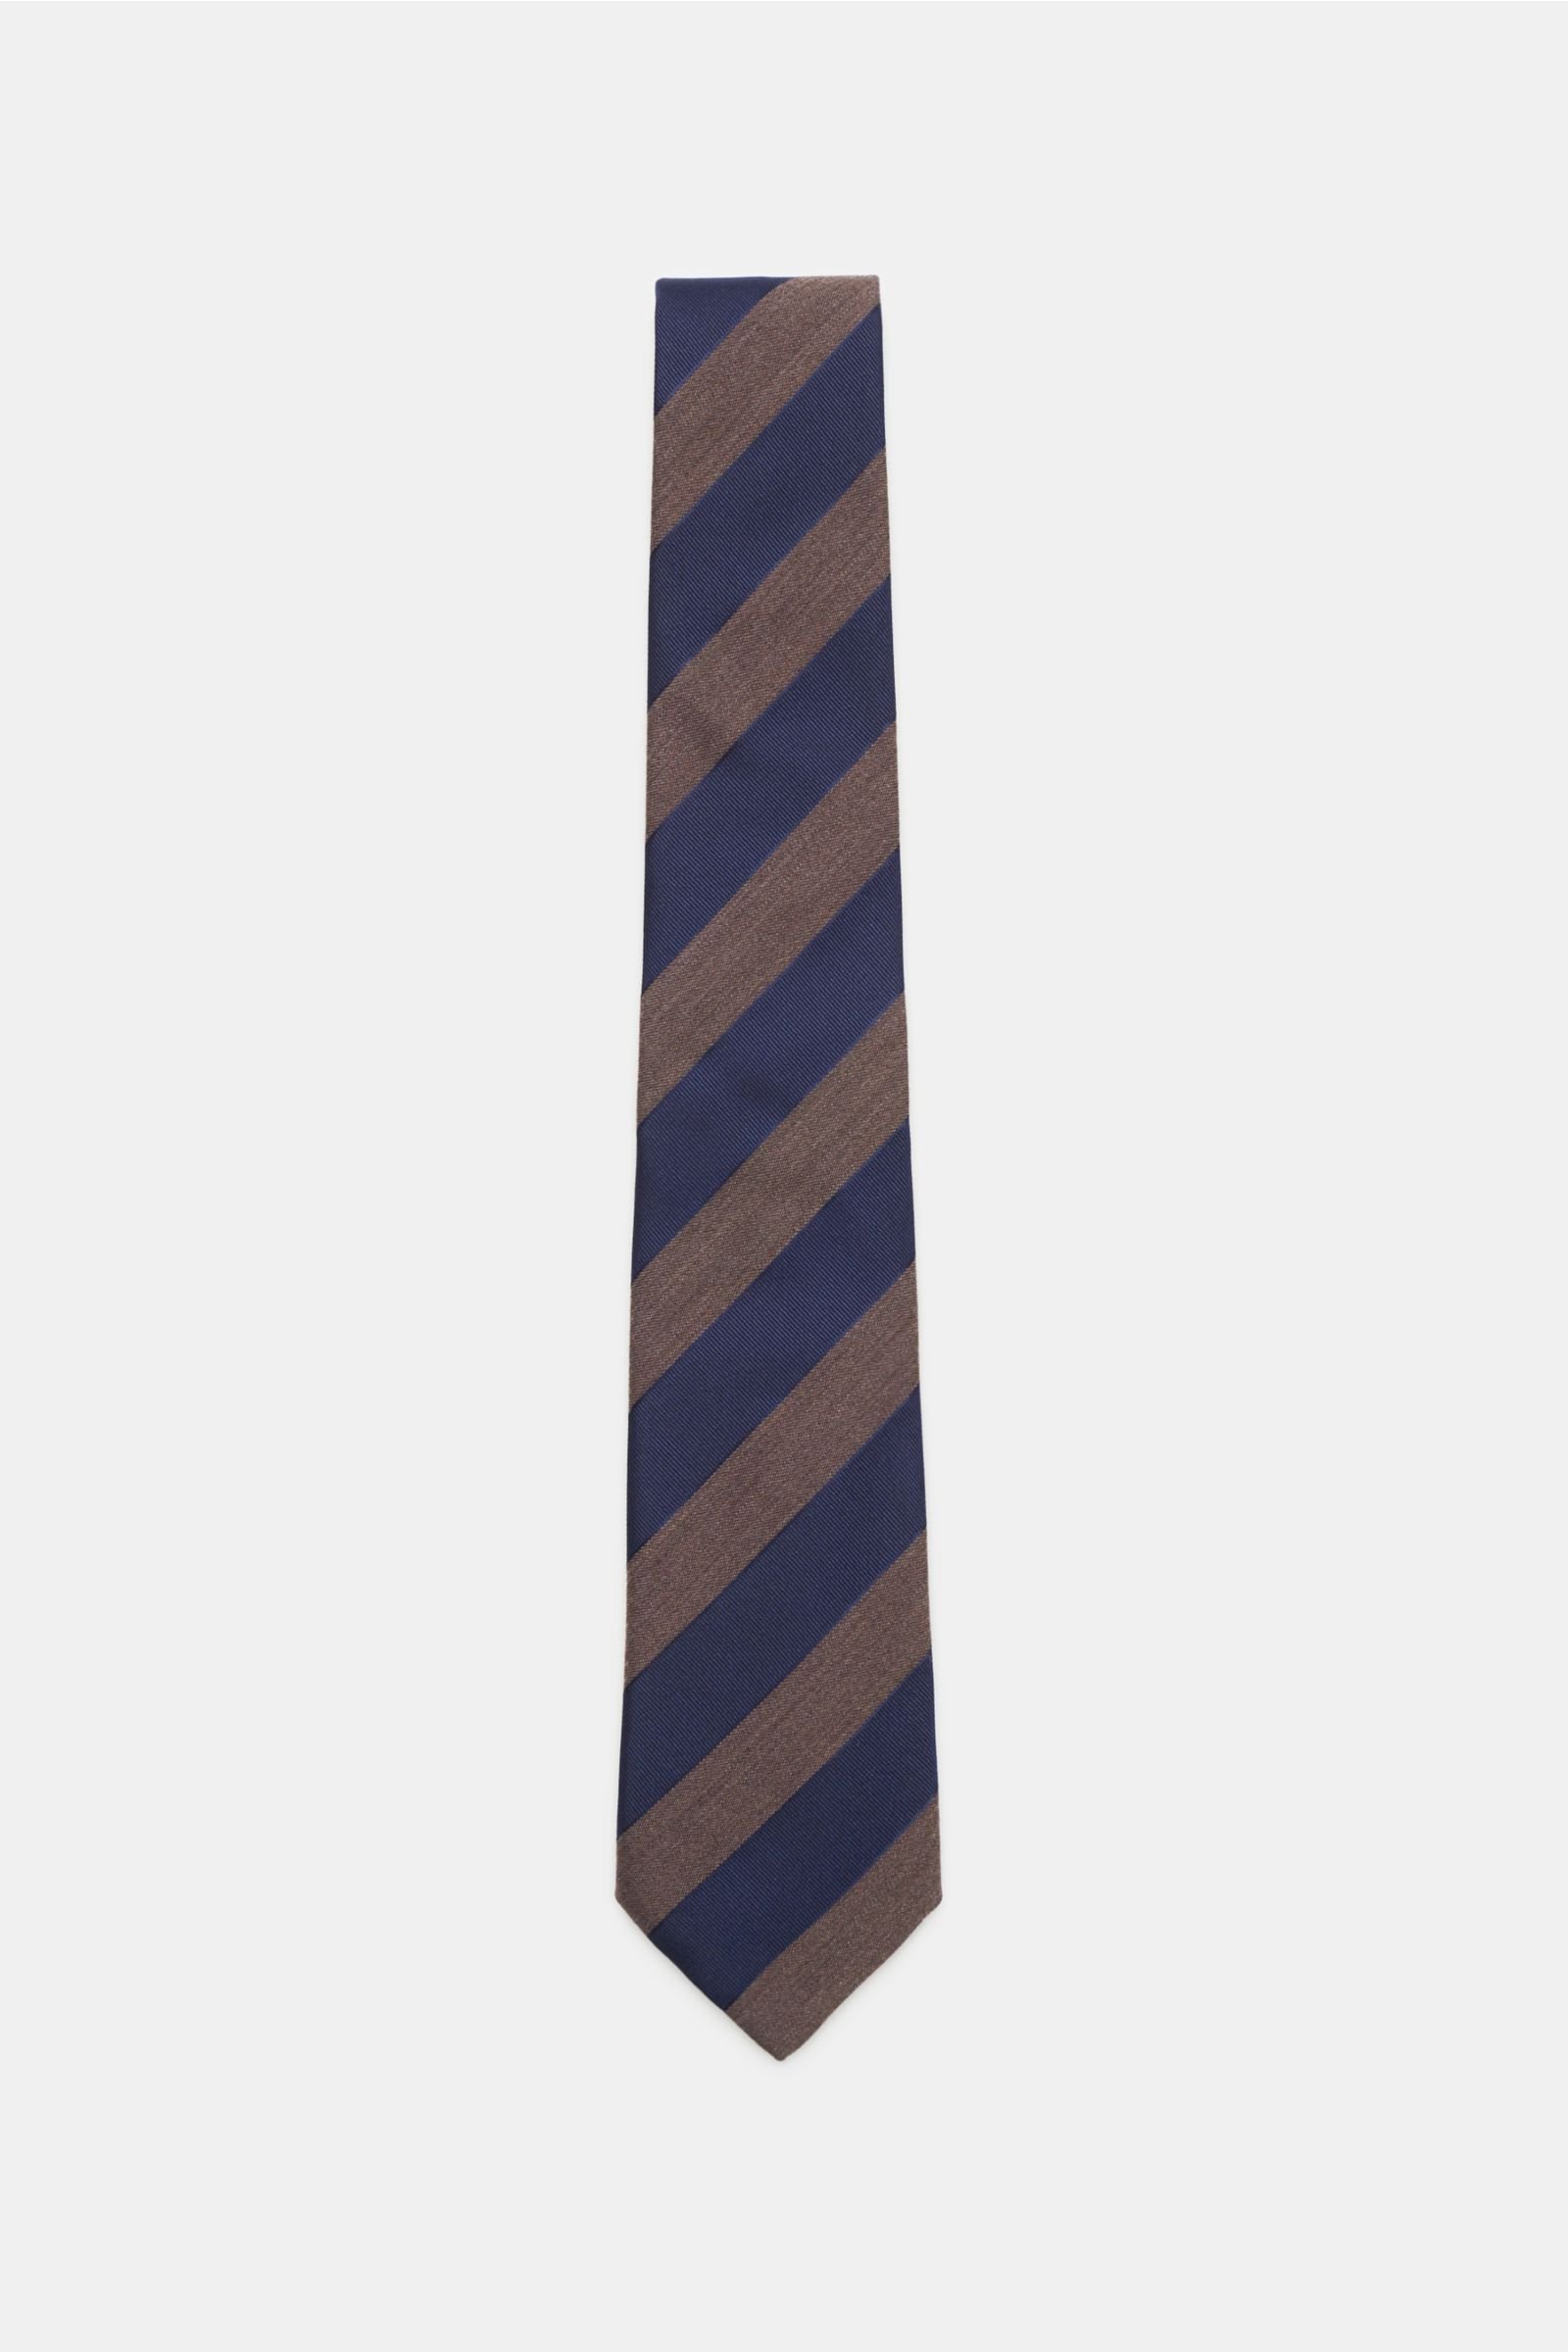 Tie navy/grey-brown striped